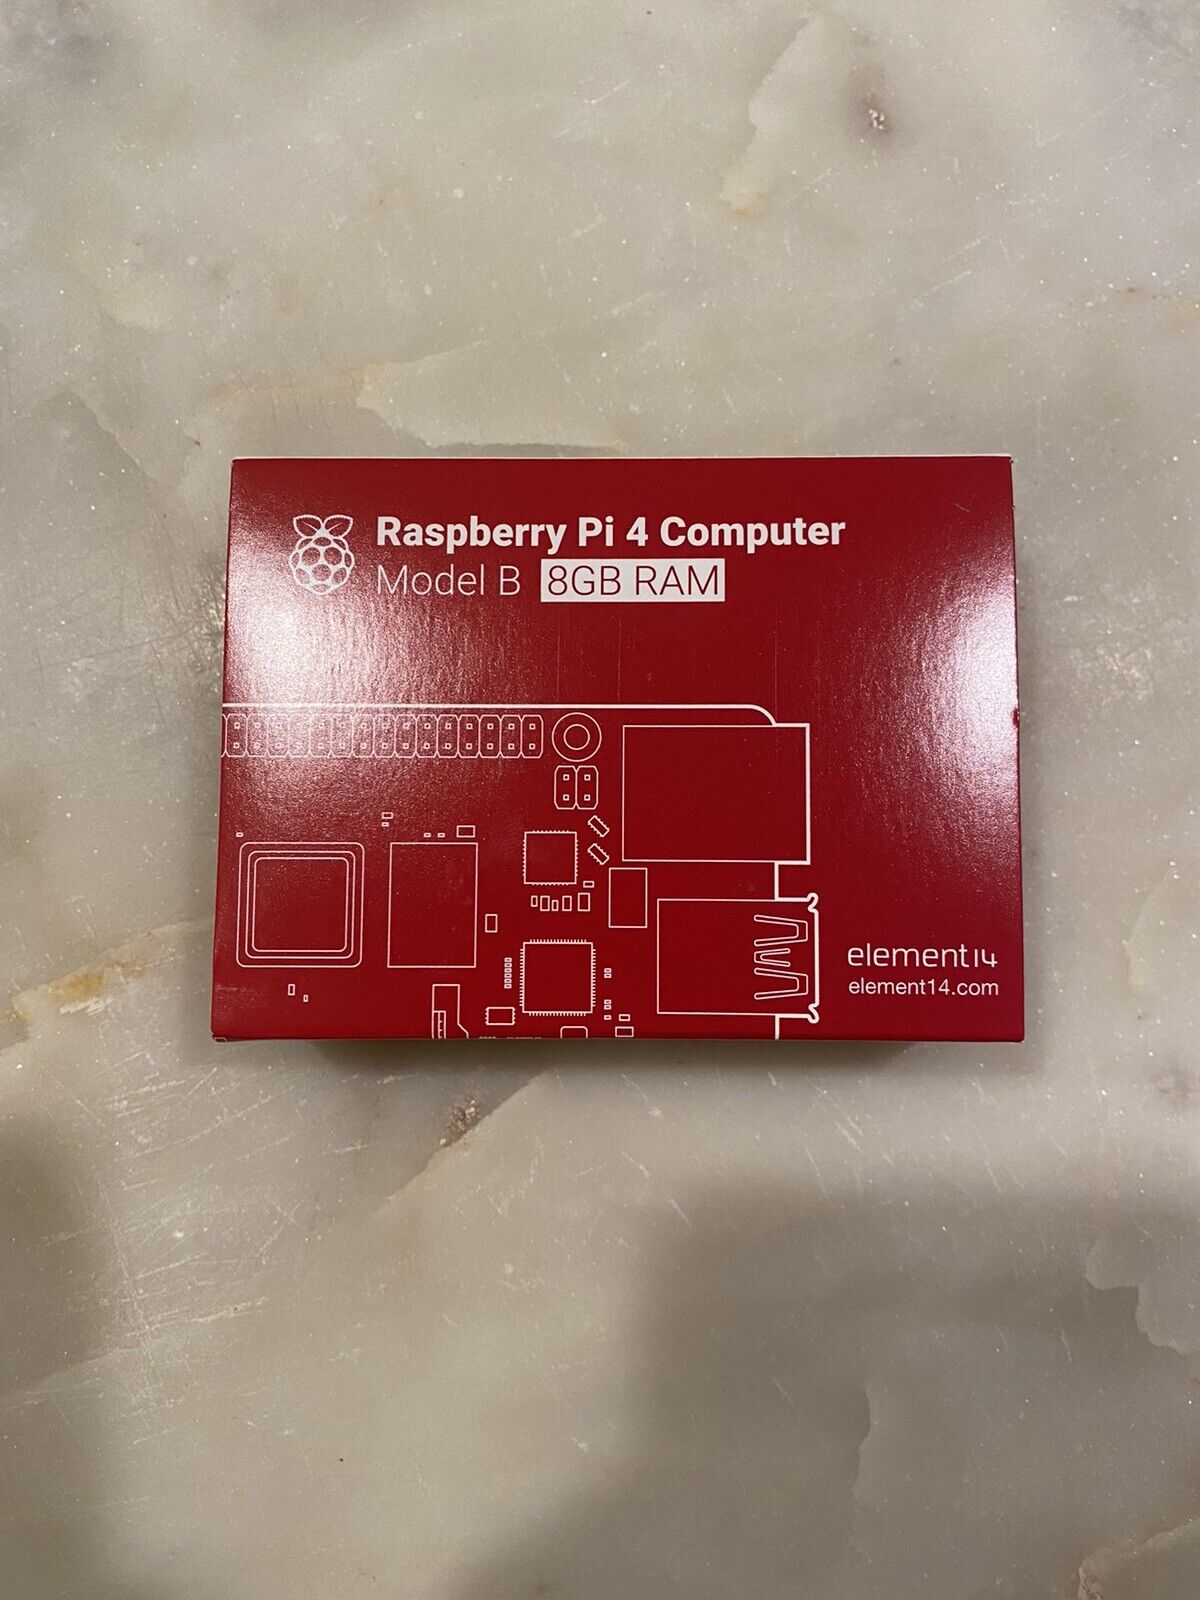 NEW Raspberry Pi 4 Model B 8GB (1.5GHz Quad Core CPU, WiFi, Bluetooth) FREE SHIP